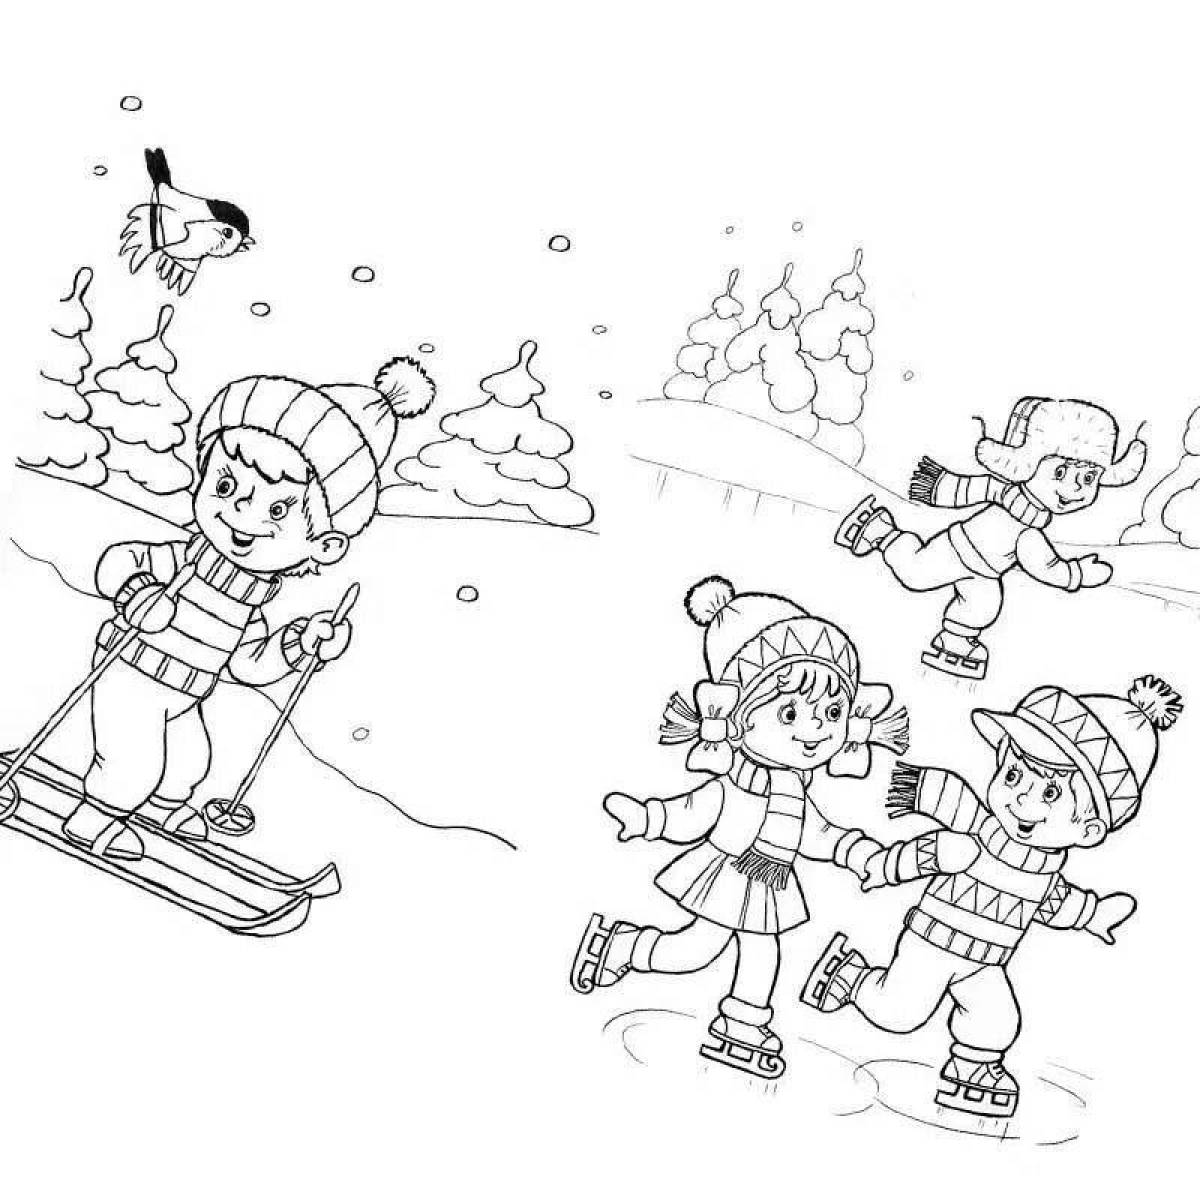 On winter sports #5